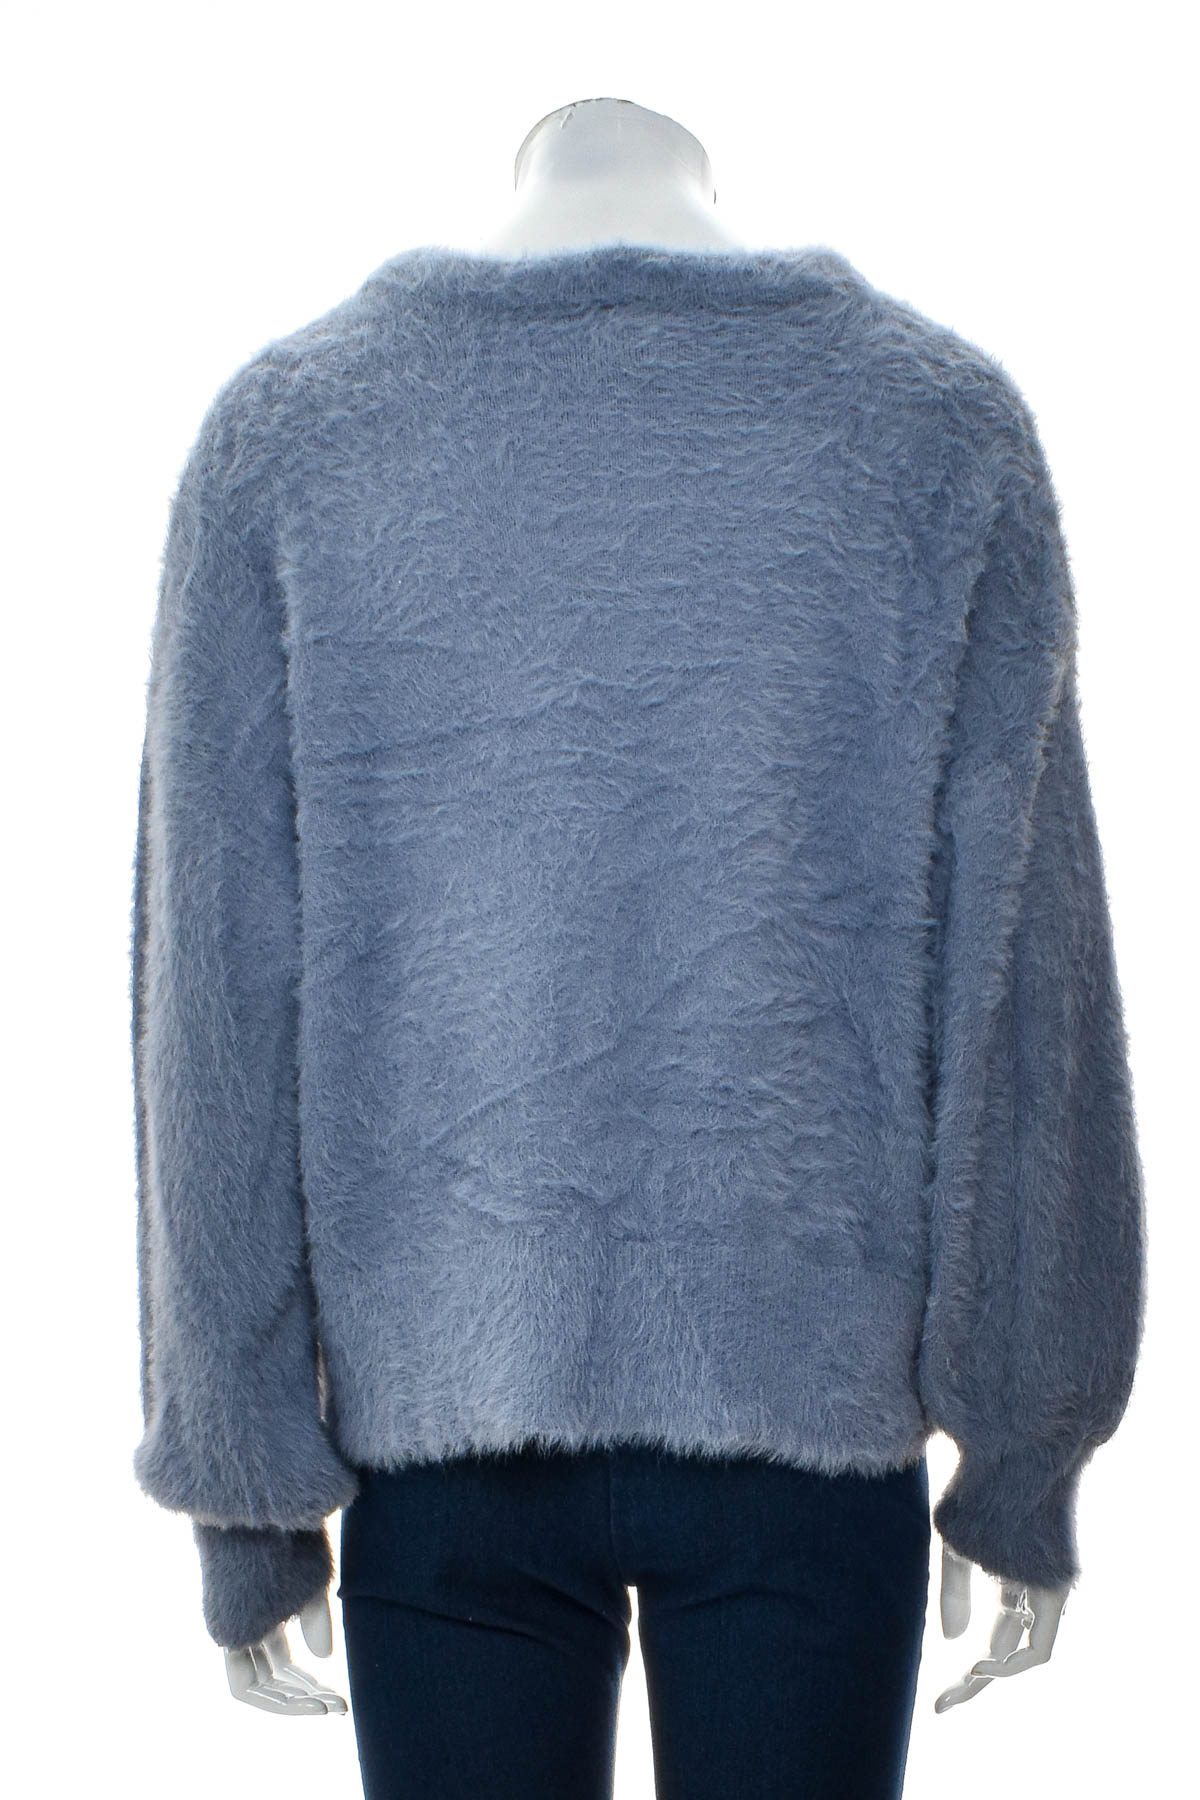 Women's sweater - Anko - 1